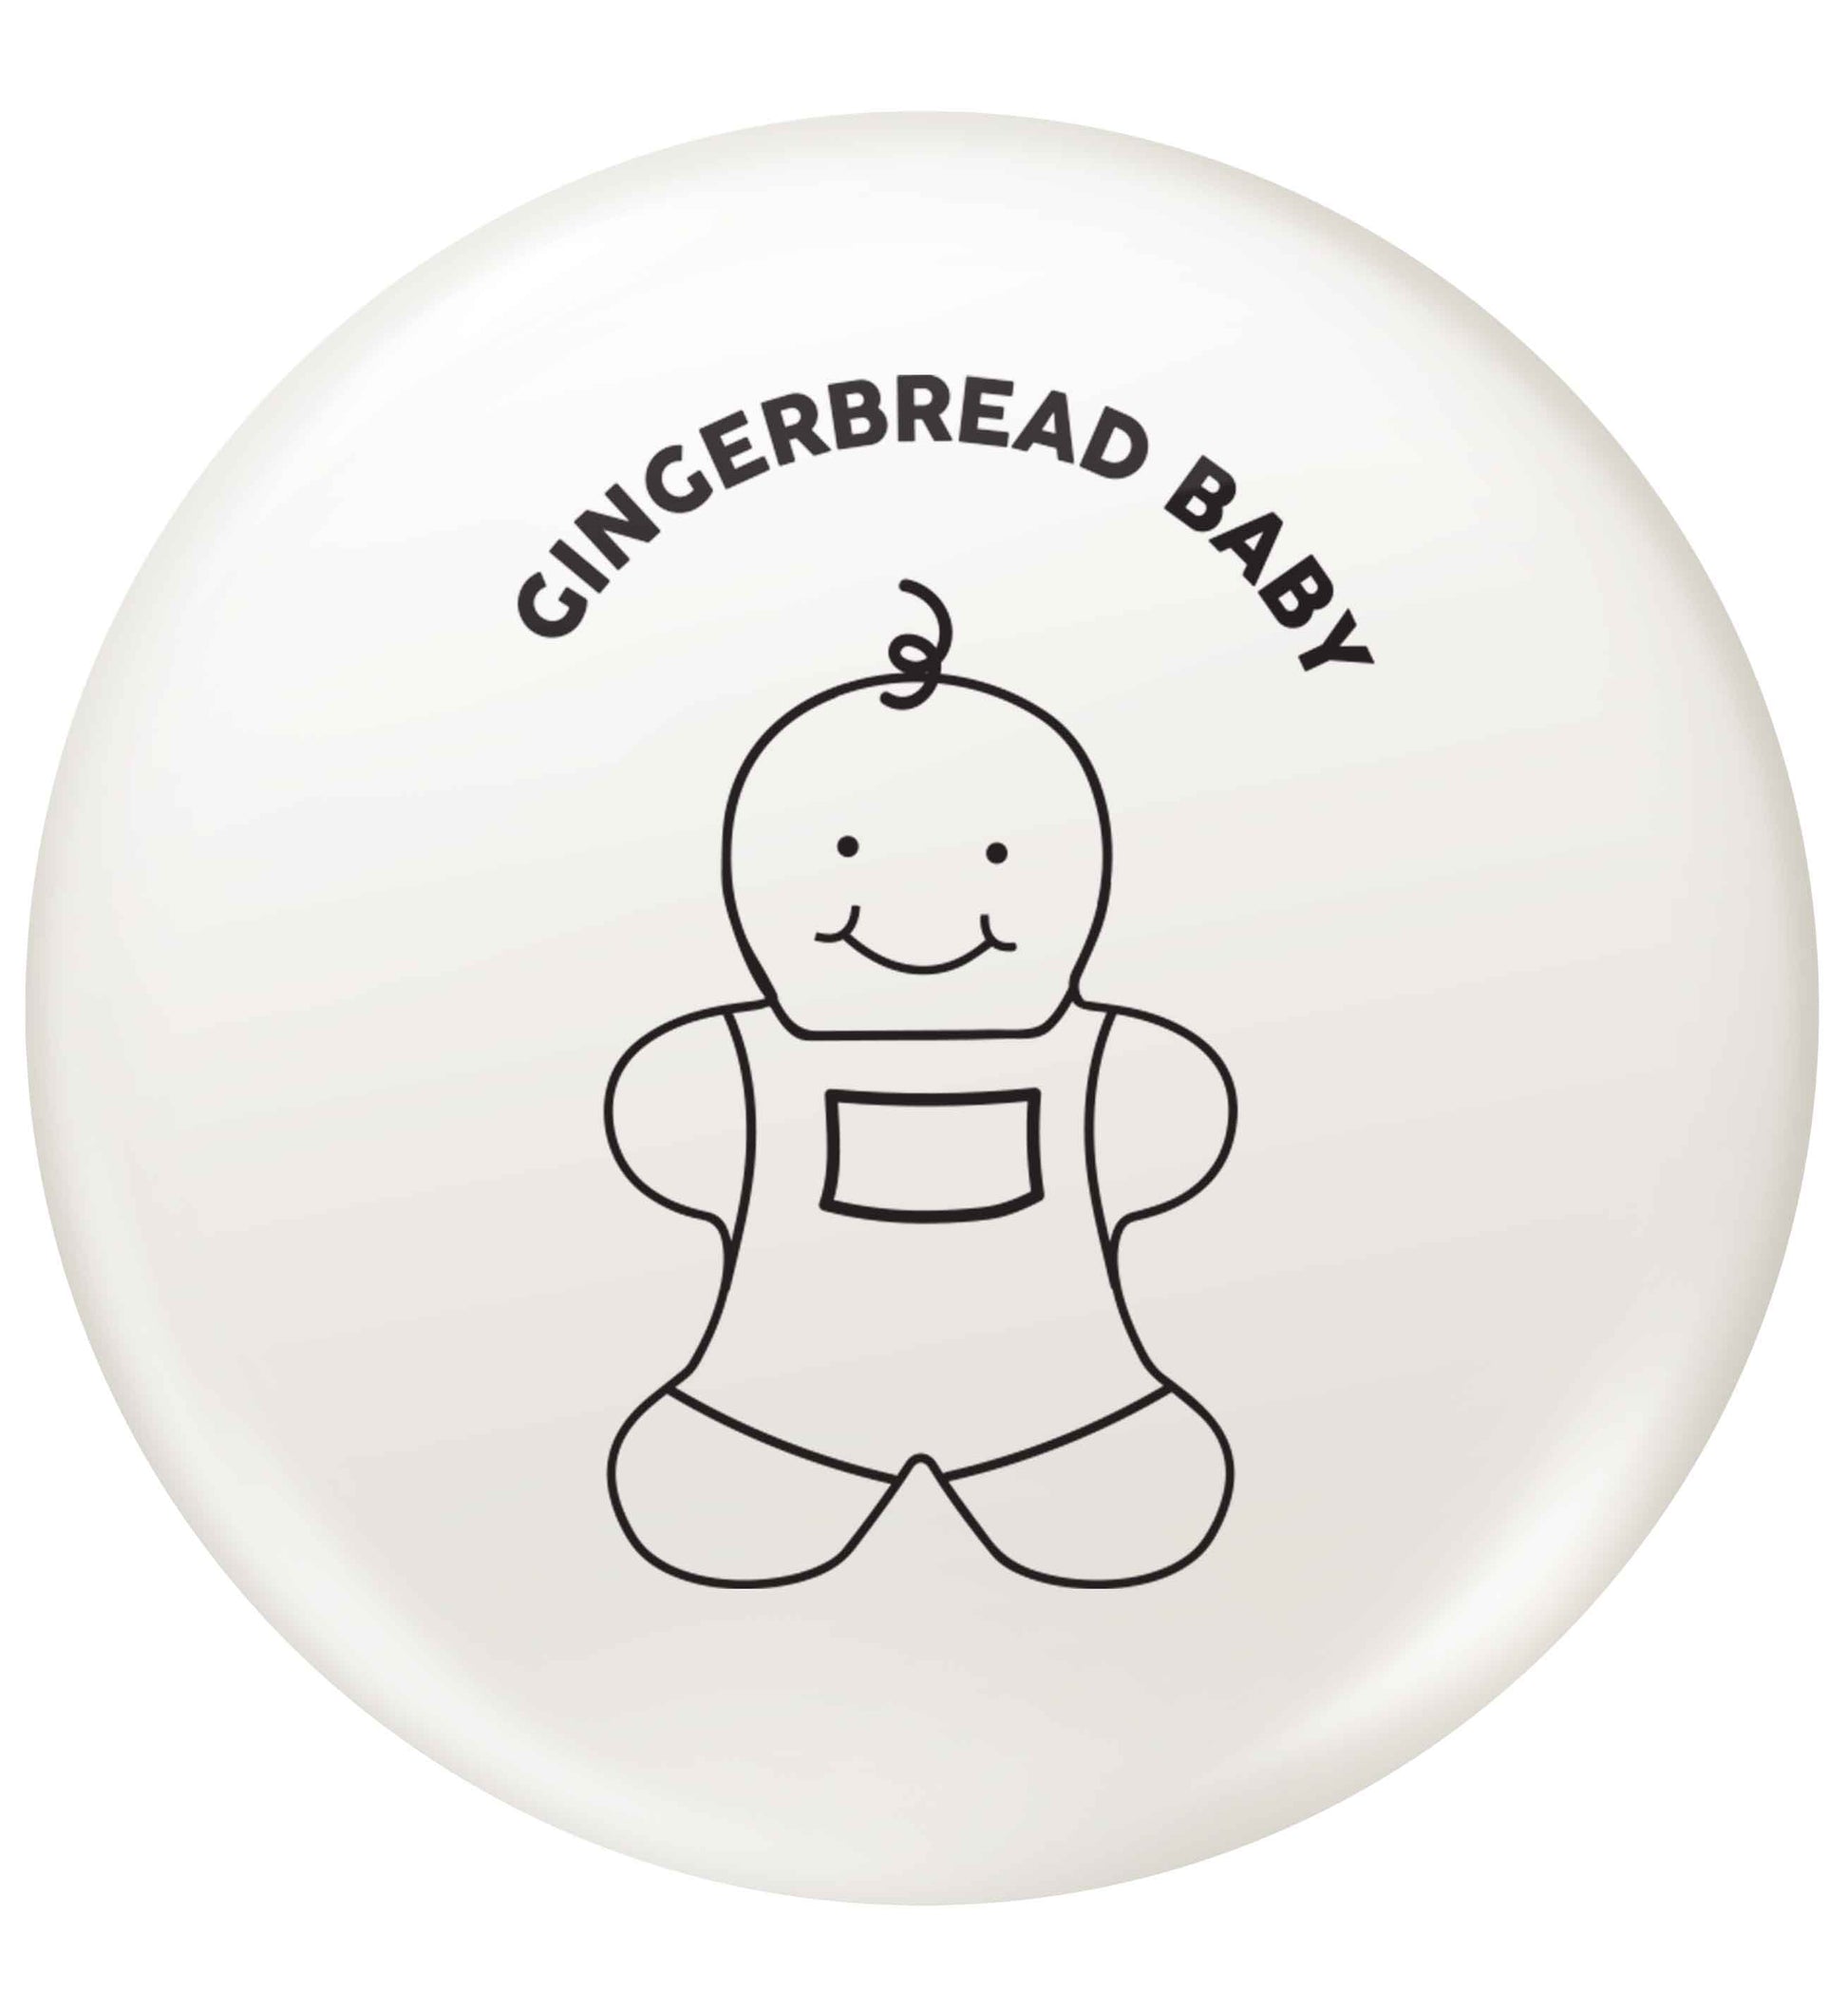 Gingerbread baby small 25mm Pin badge